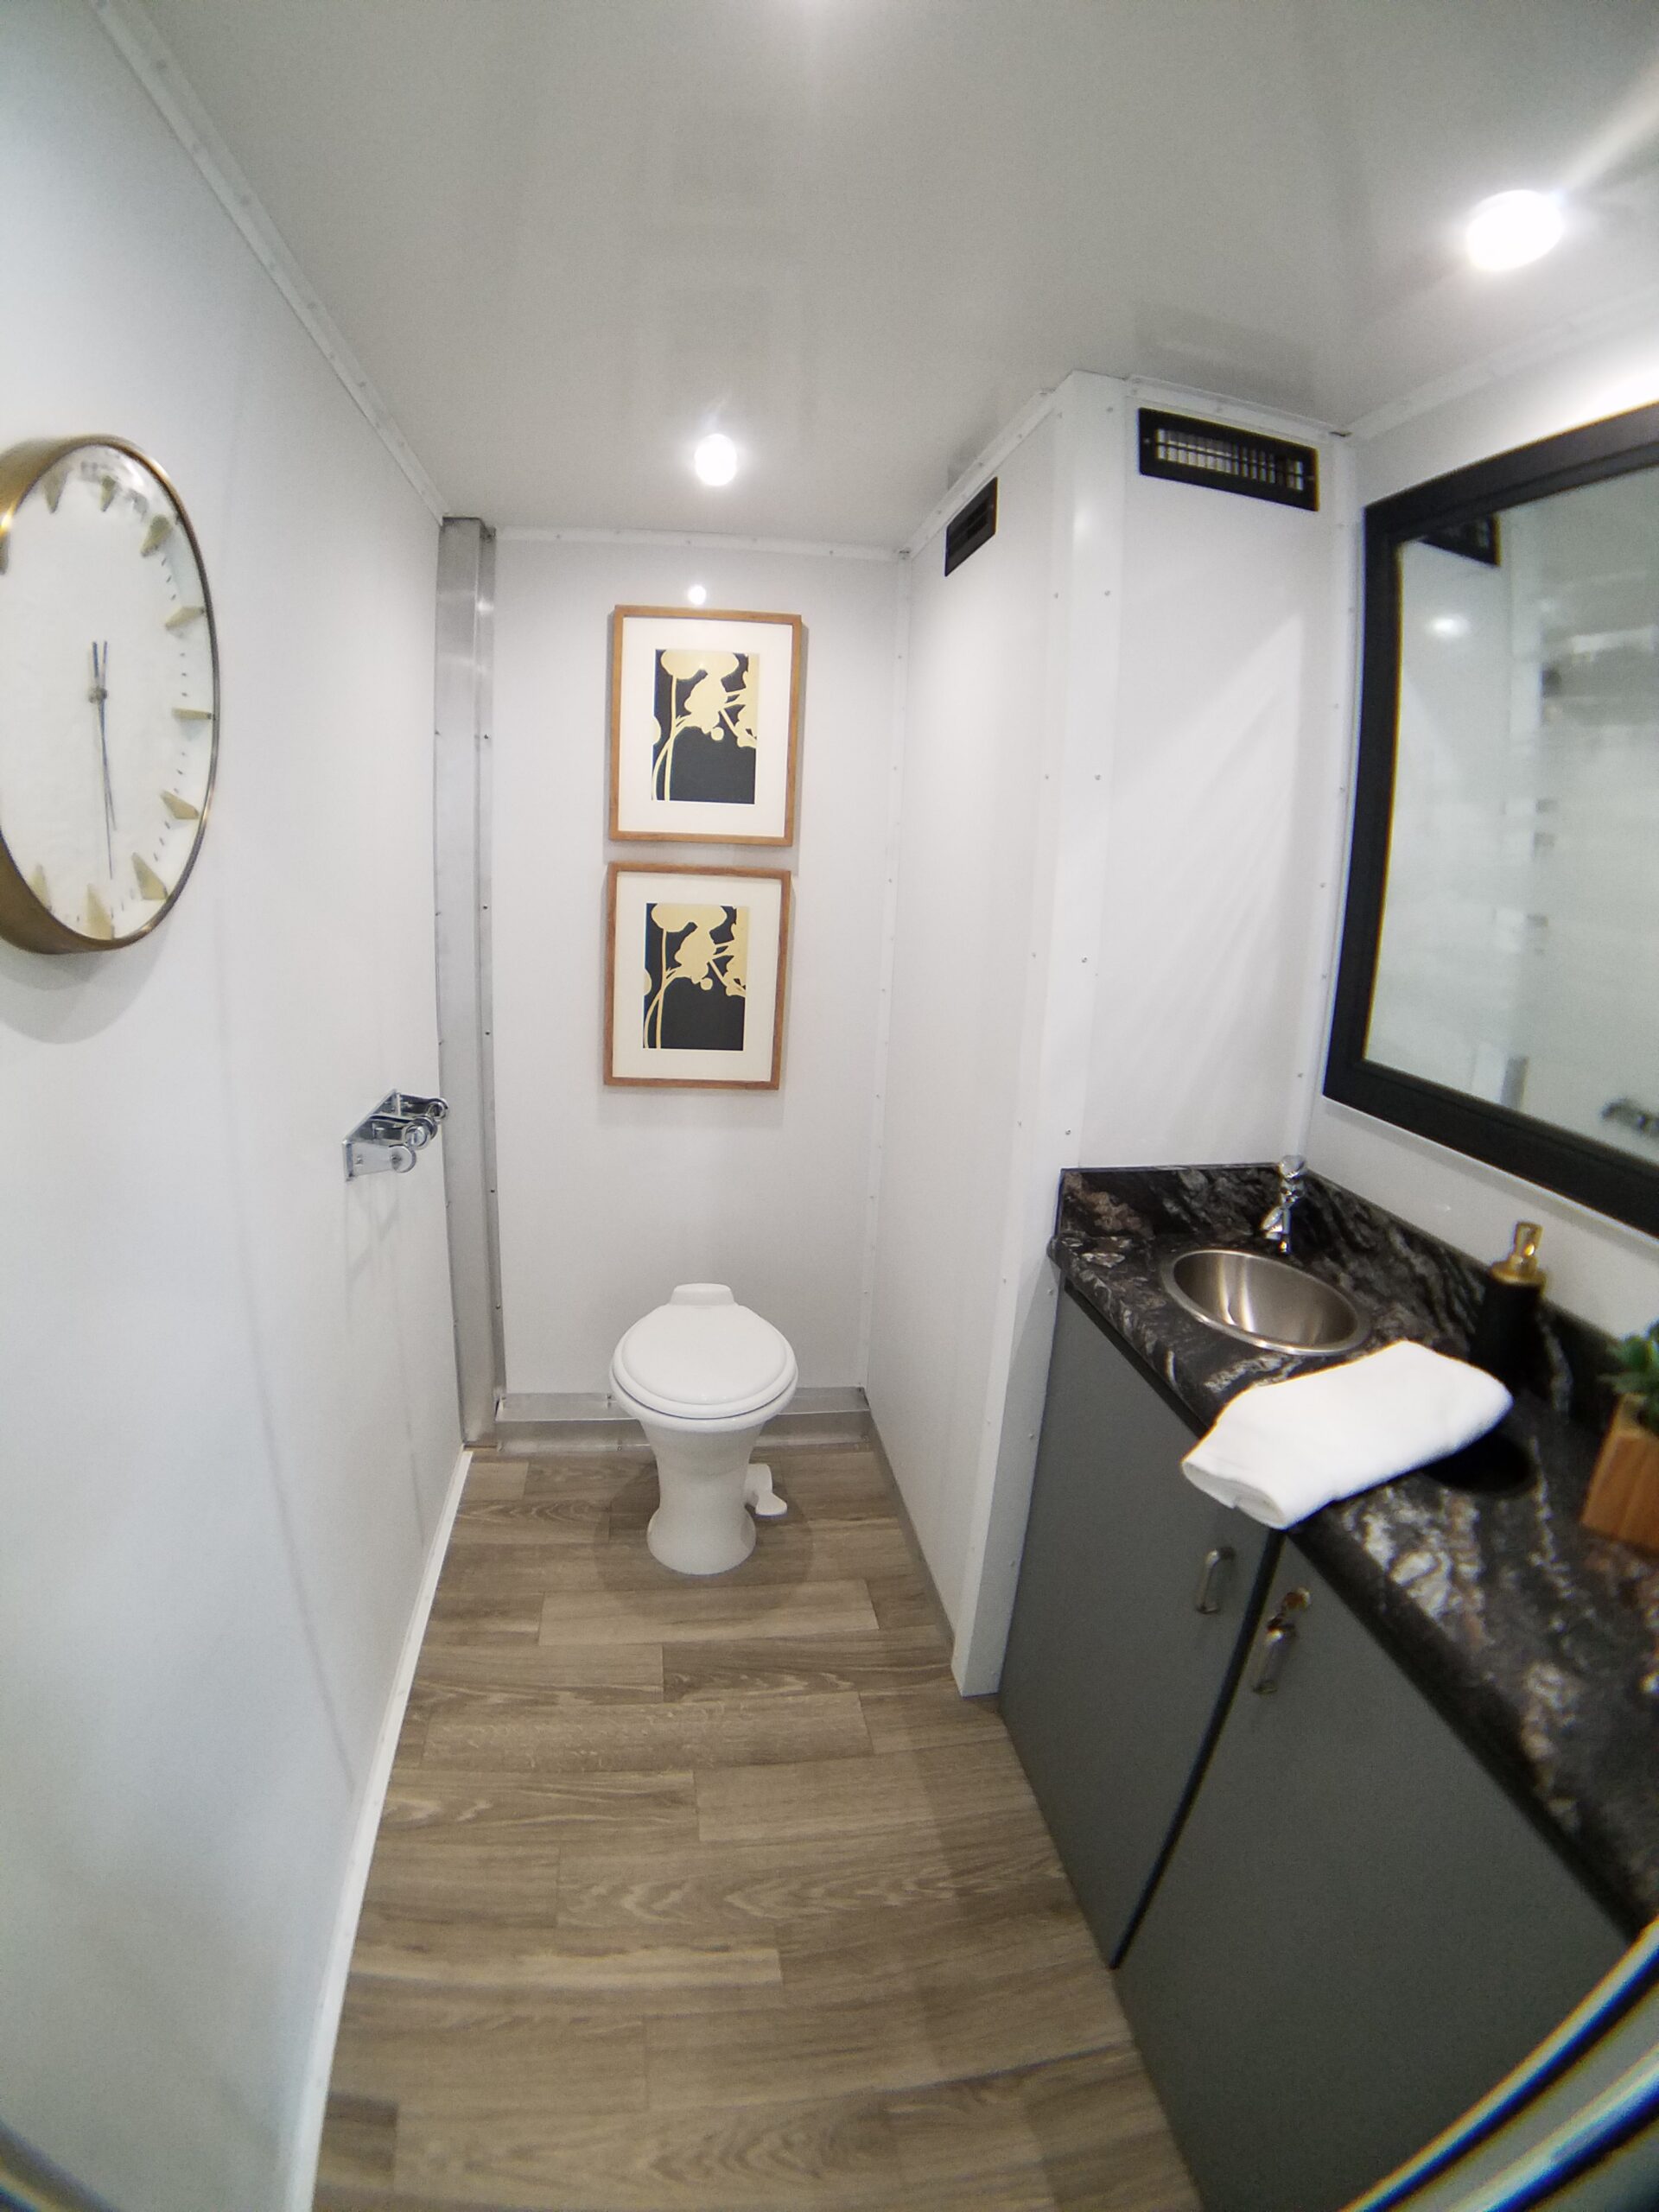 2 Station Luxury Portable Restroom Trailer Rental in Clovis